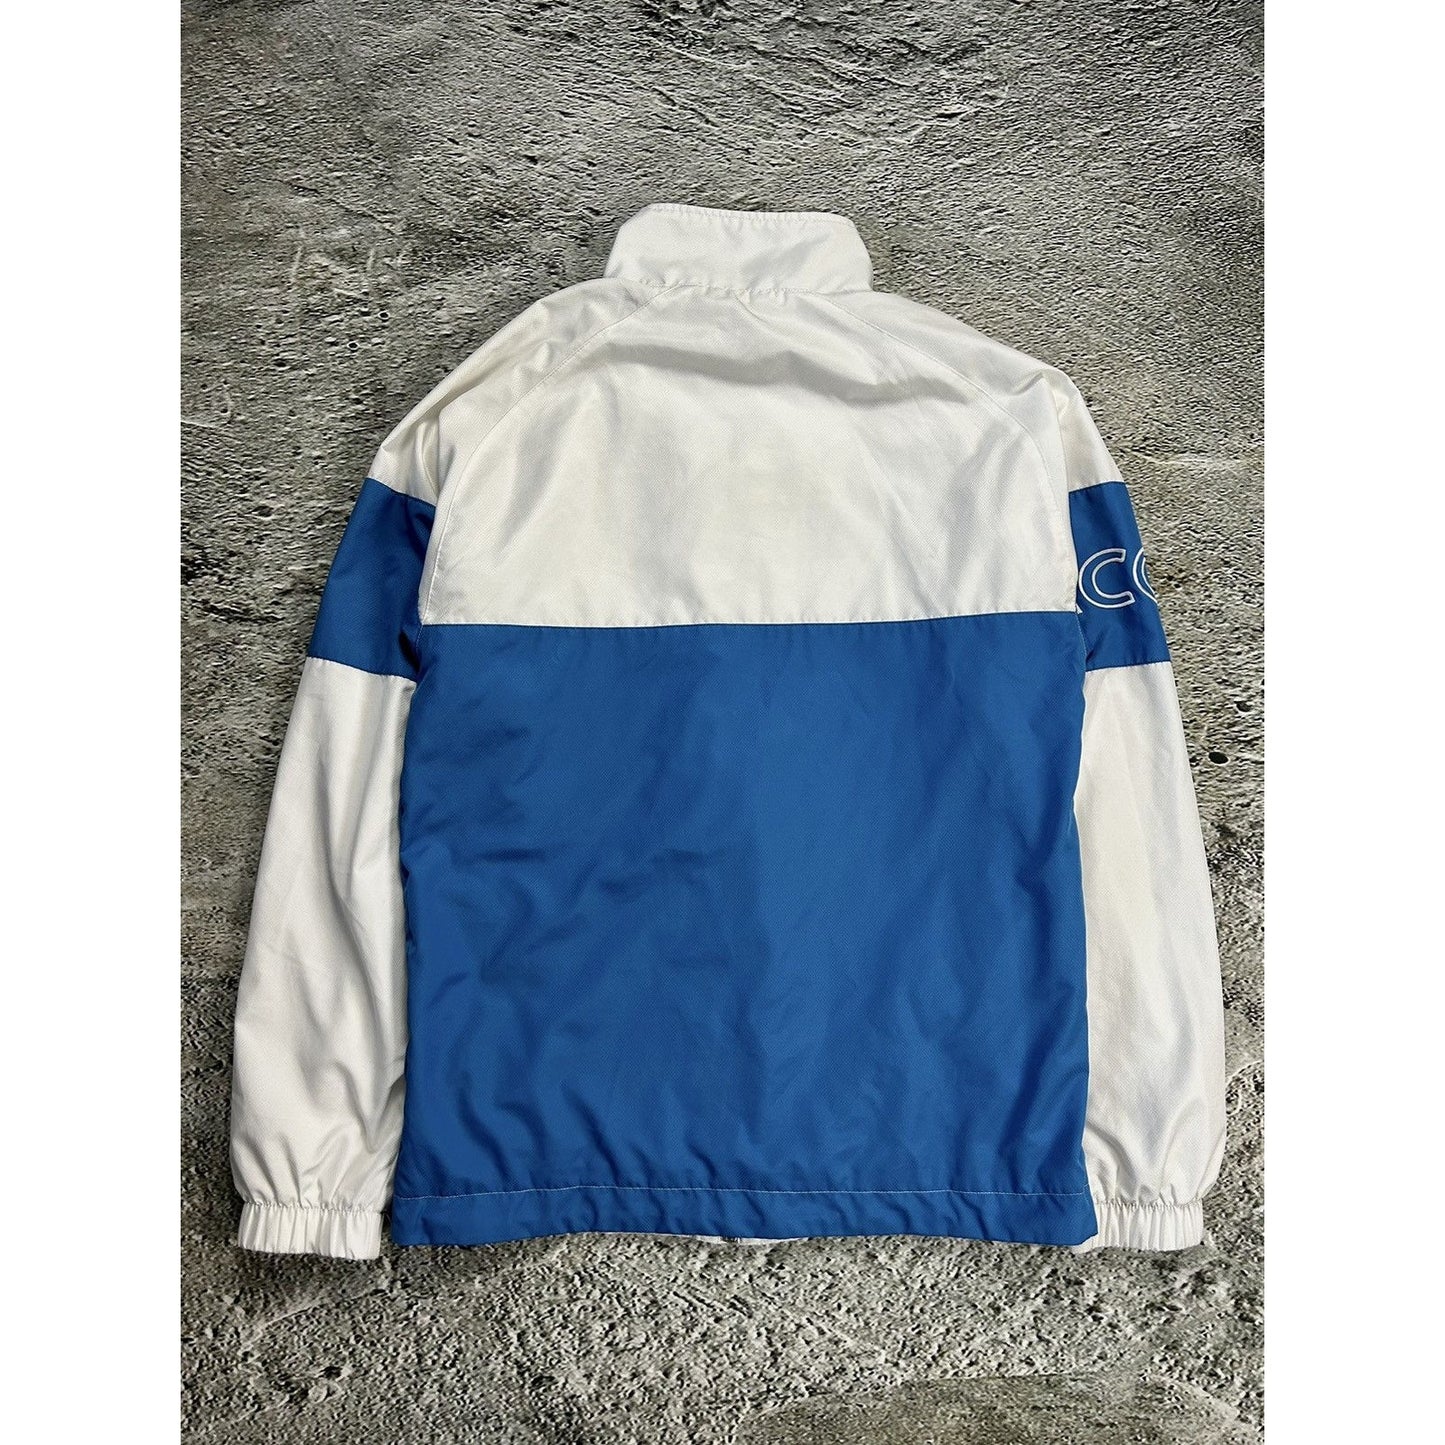 Lacoste track jacket white blue vintage nylon drill Y2K